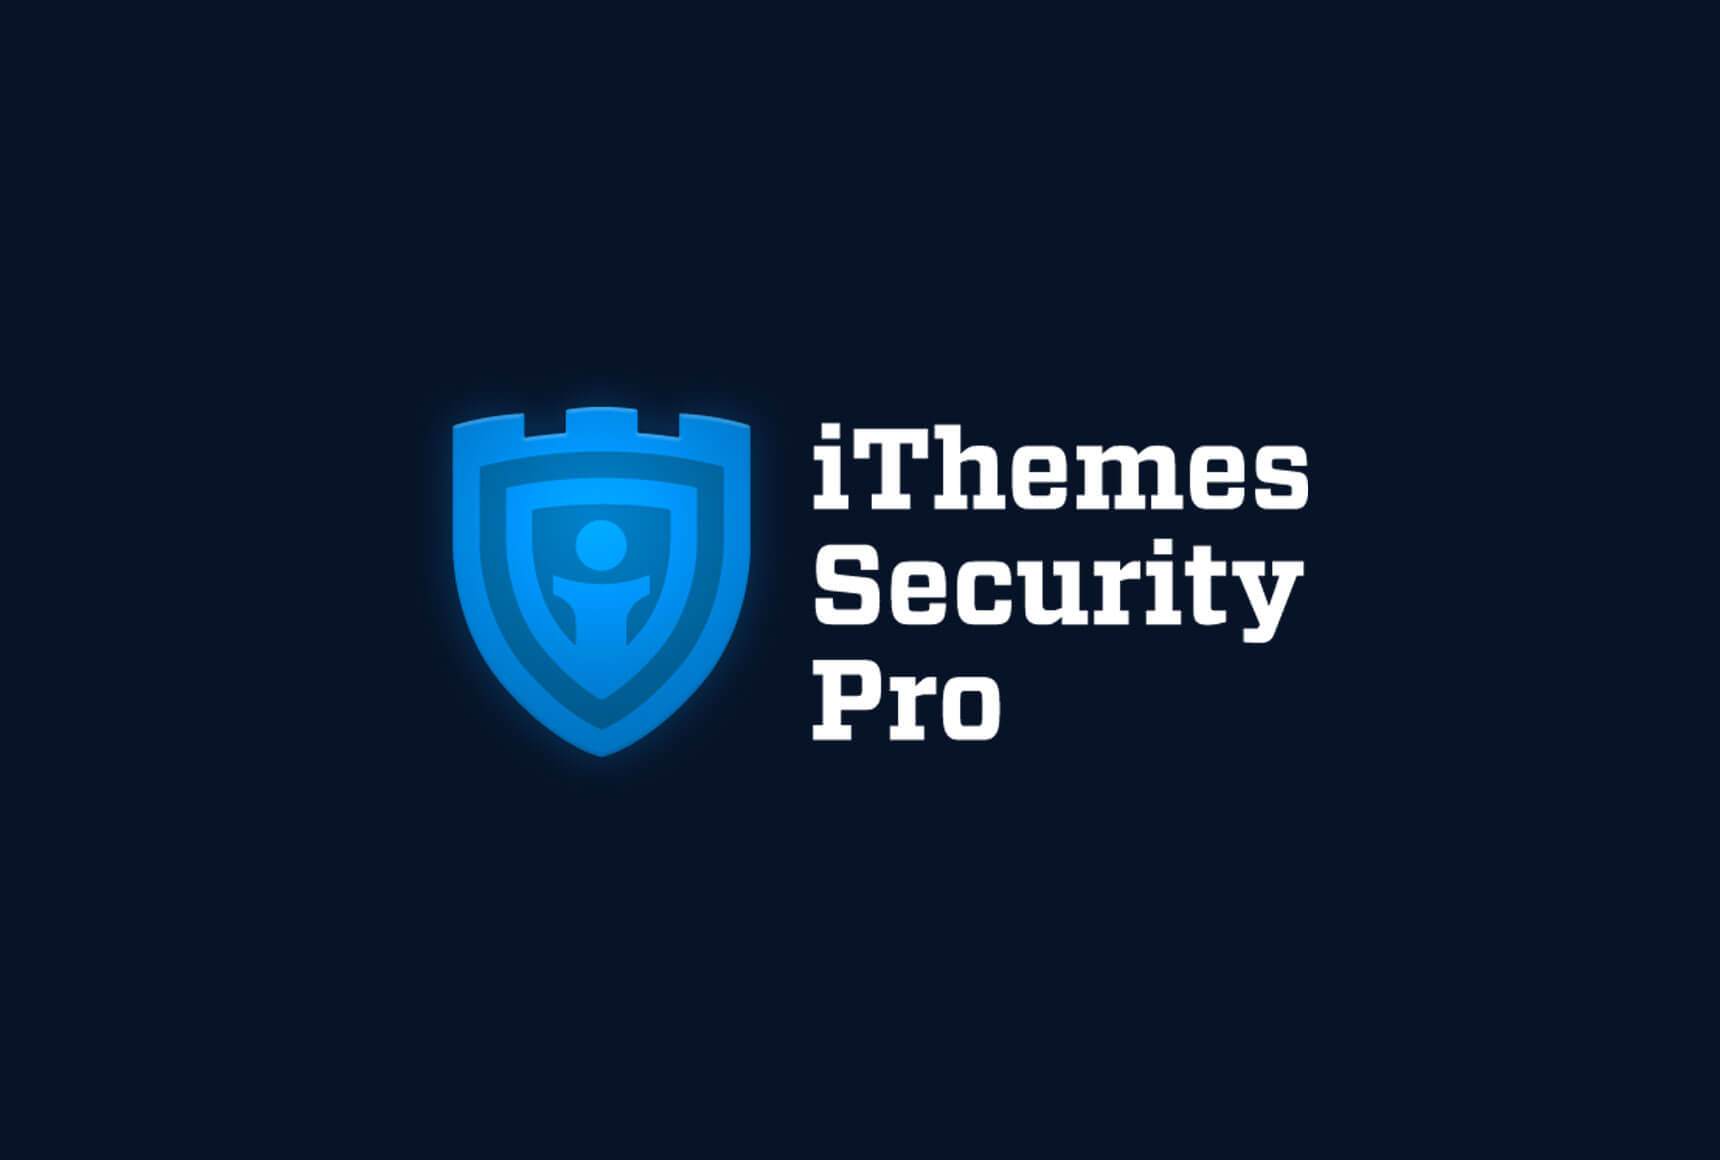 افزونه امنیتی iThemes Security و 6 ویژگی کلیدی آن